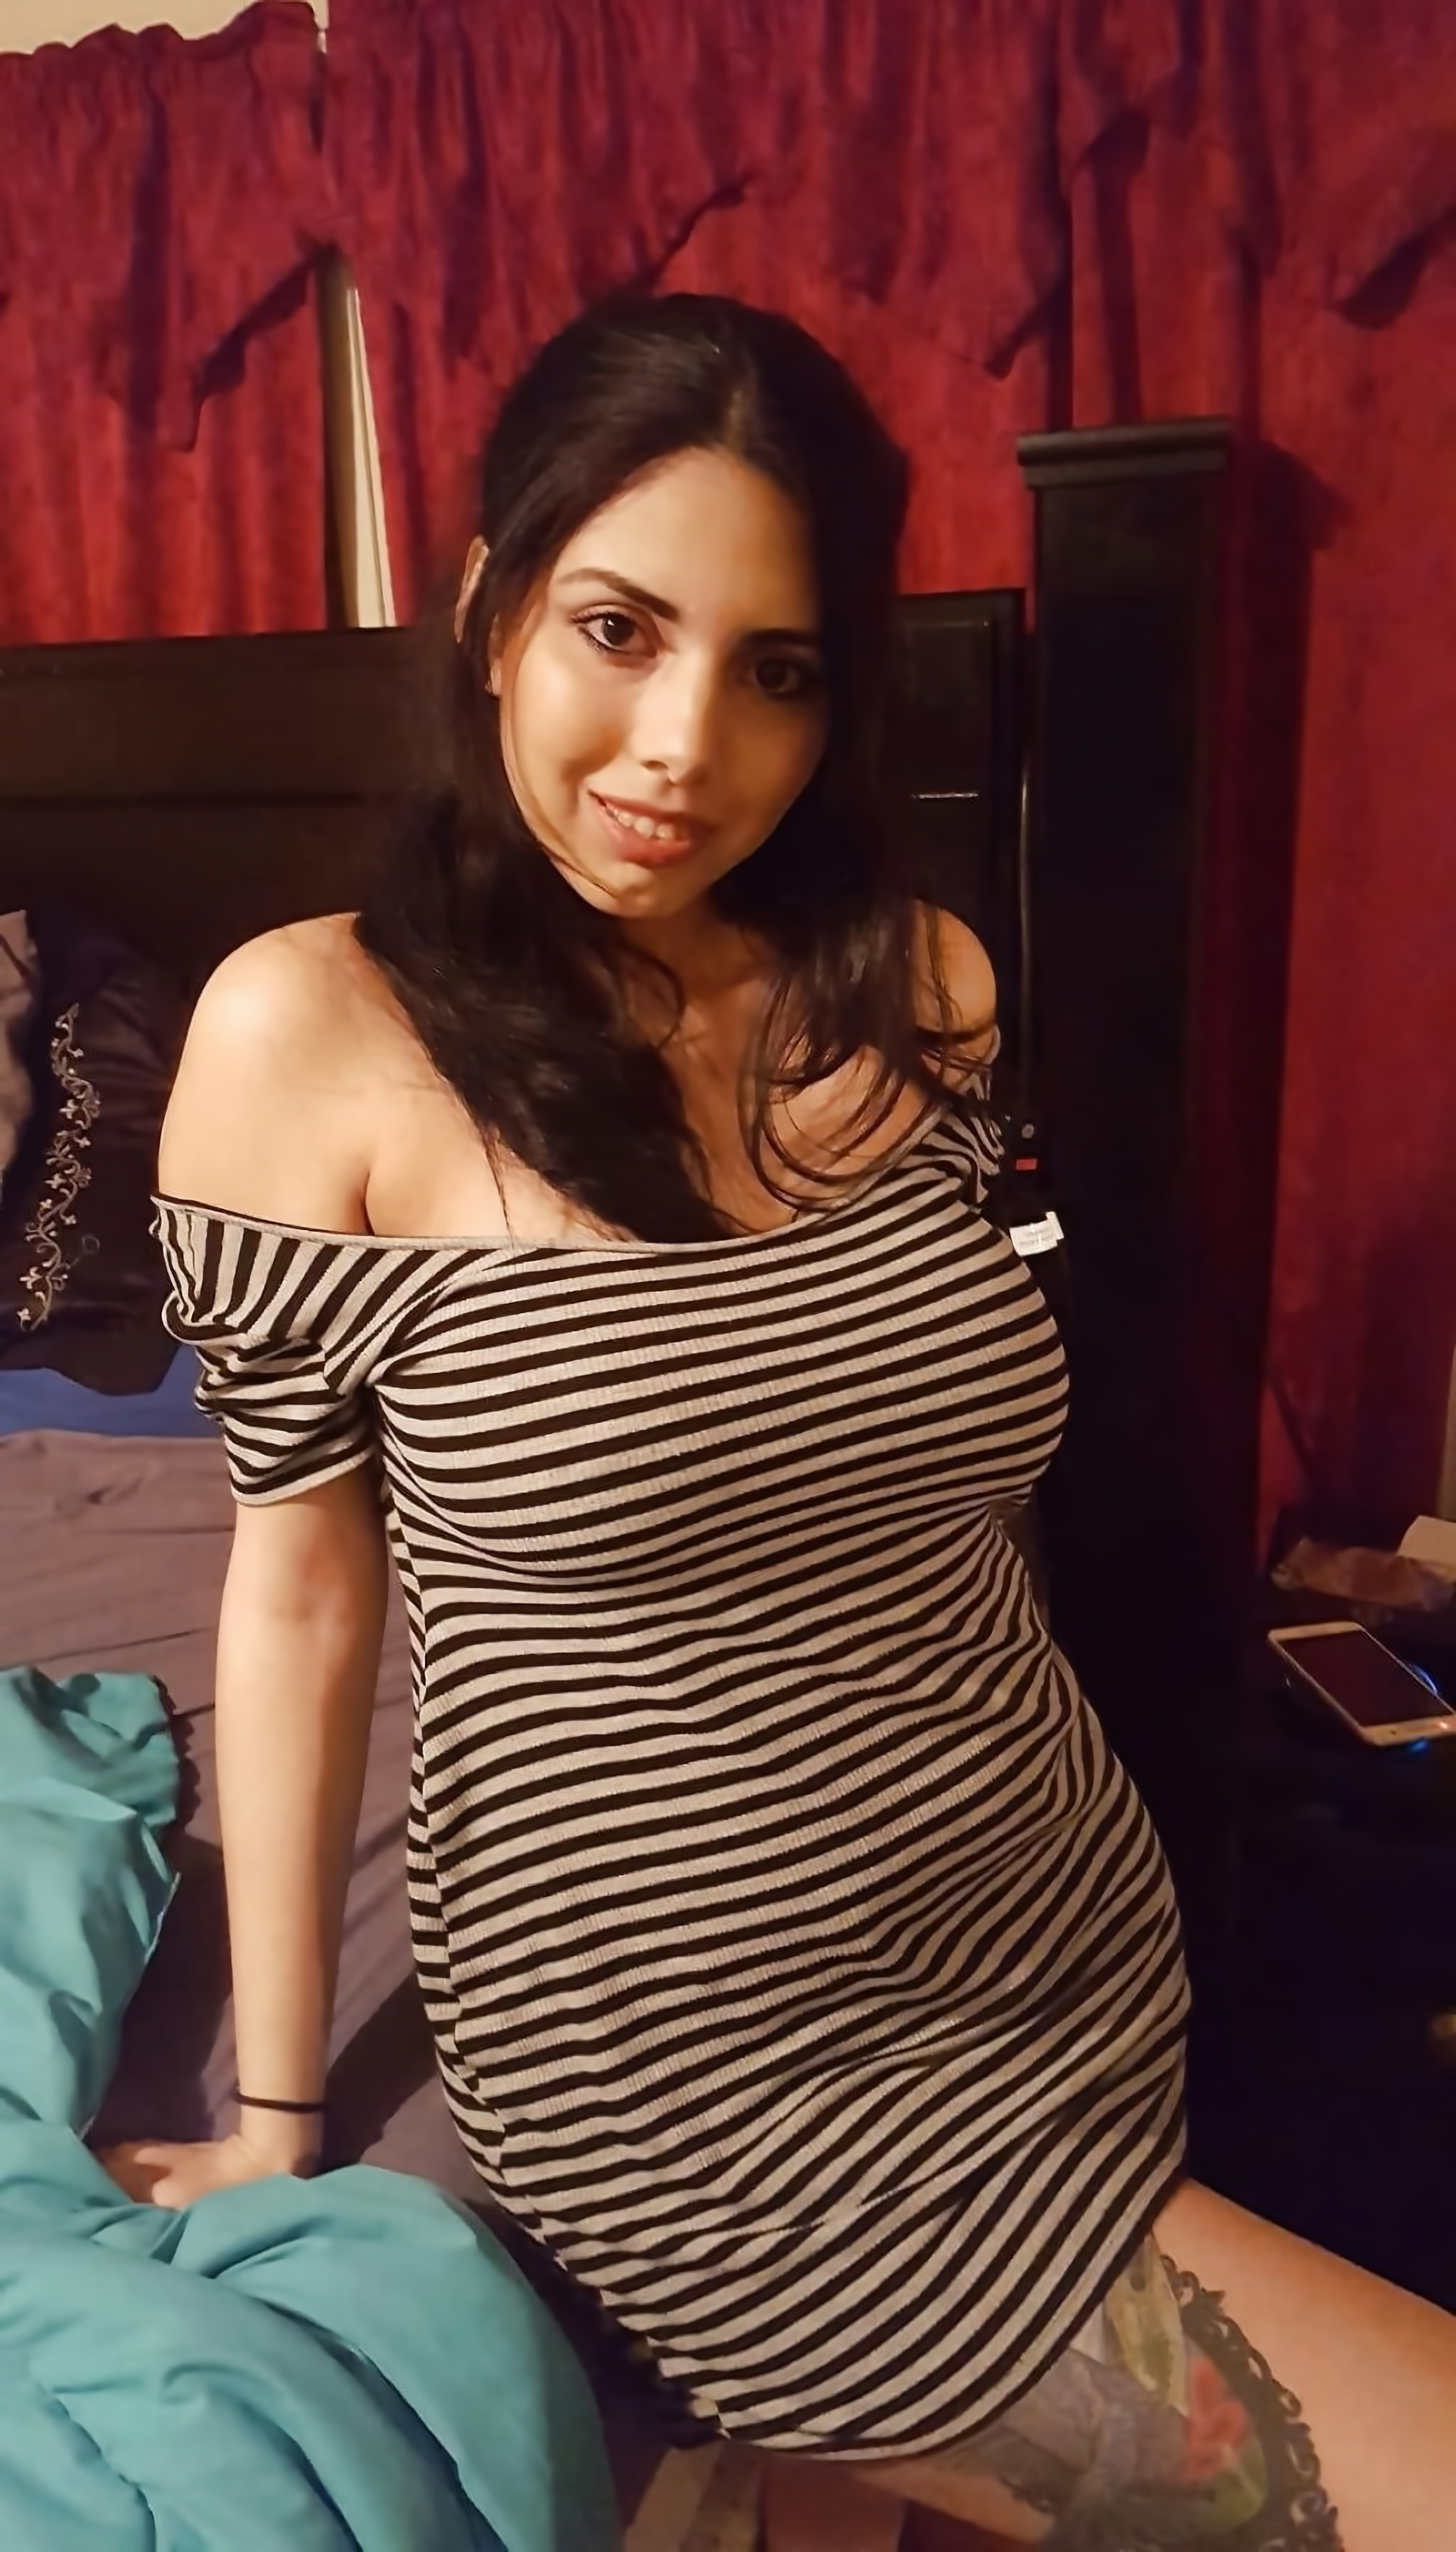 Cute busty latina slut - Cute busty latina slut (5) Porn Pic - EPORNER